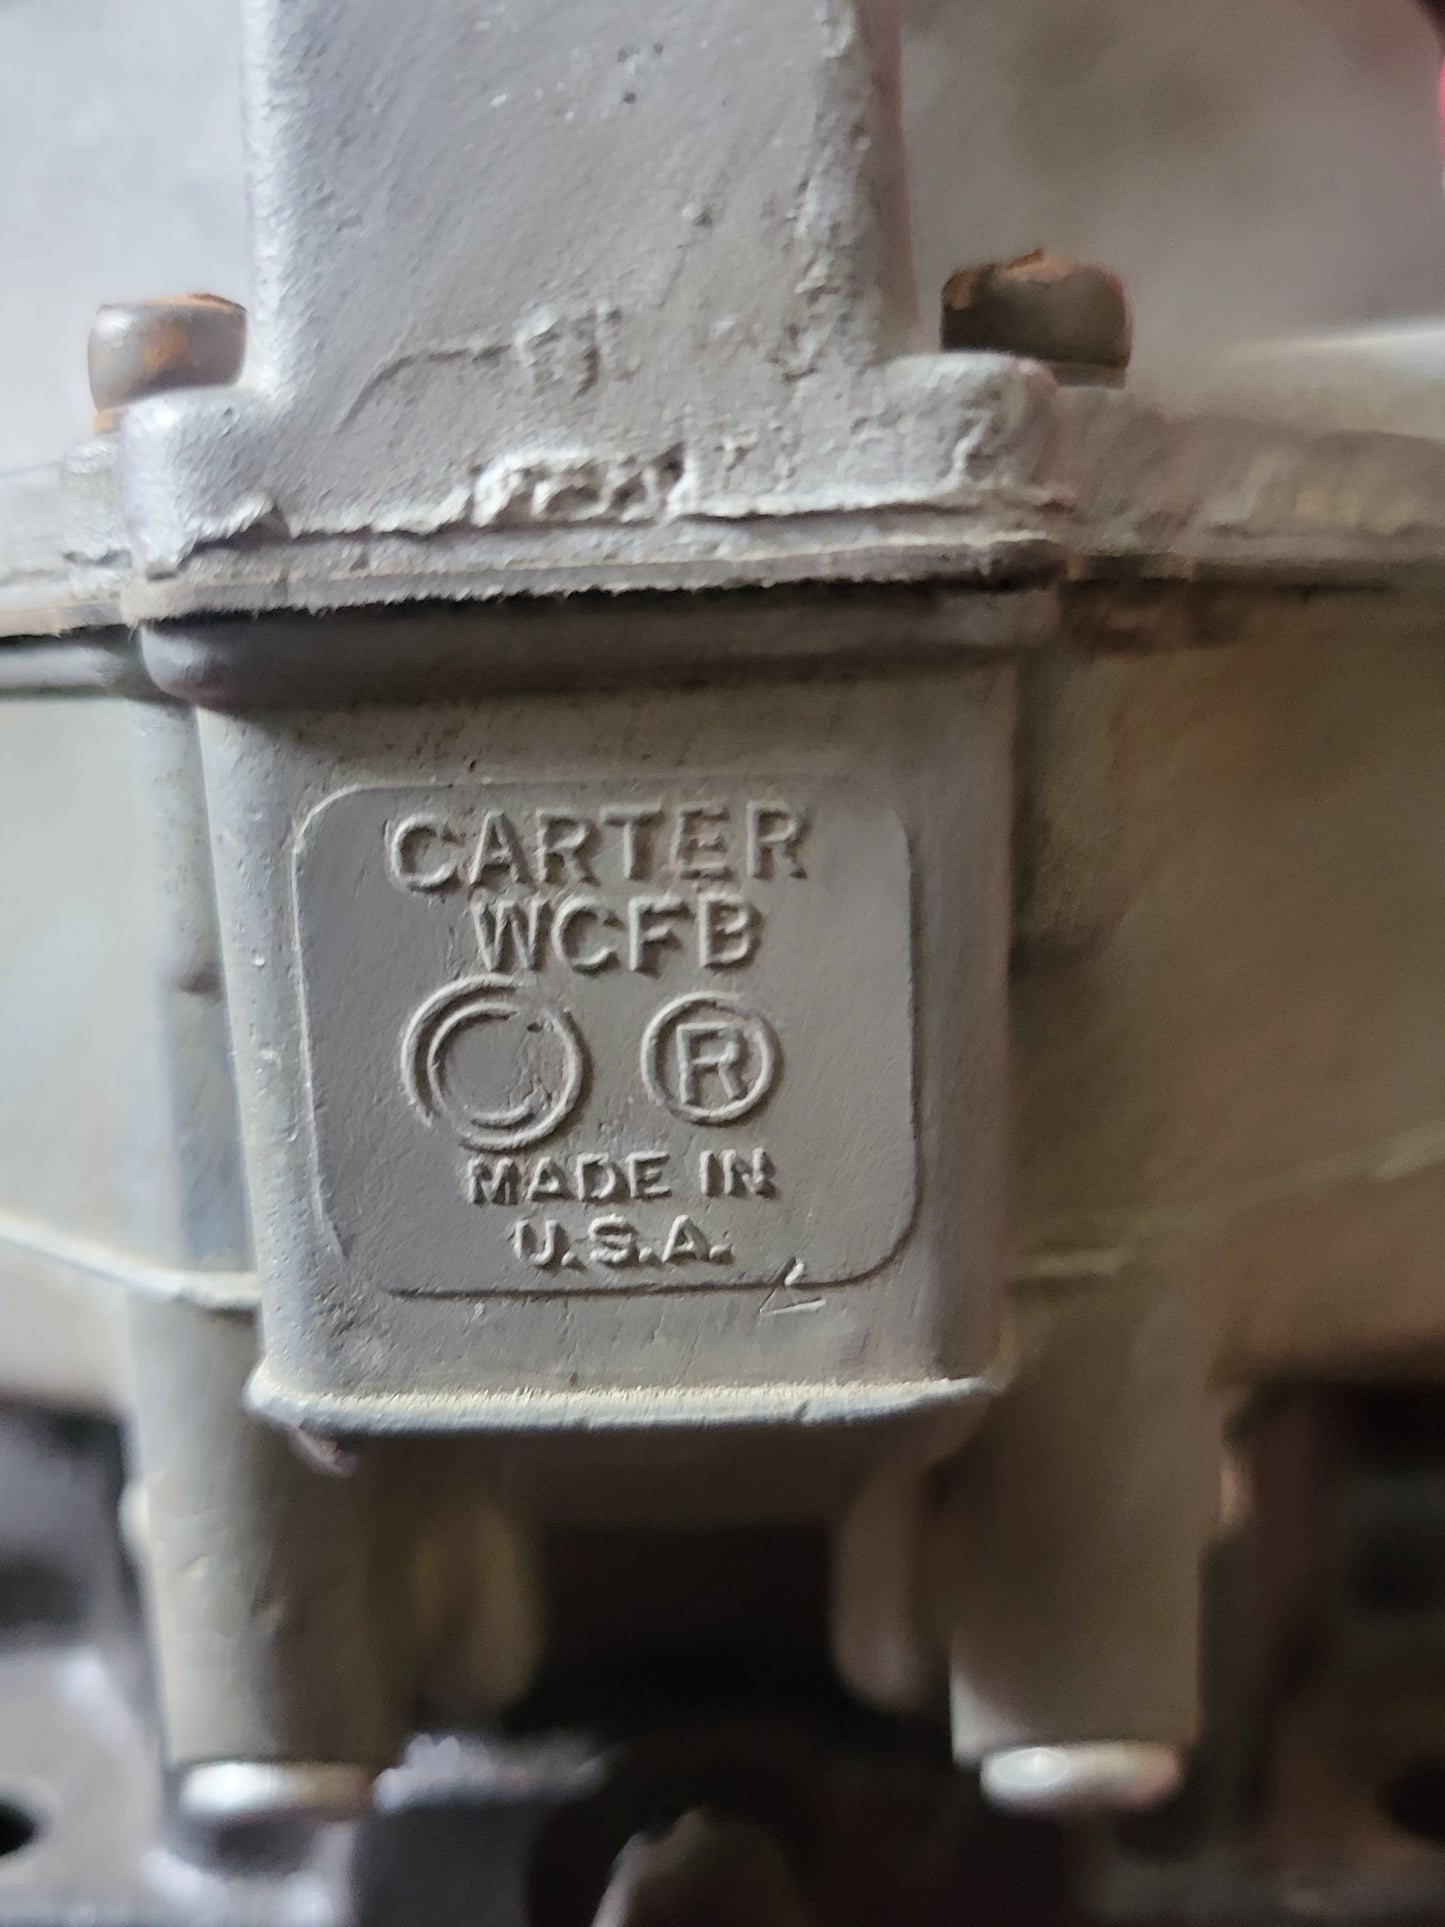 1956 Cadillac Carter WCFB Carburetor Used